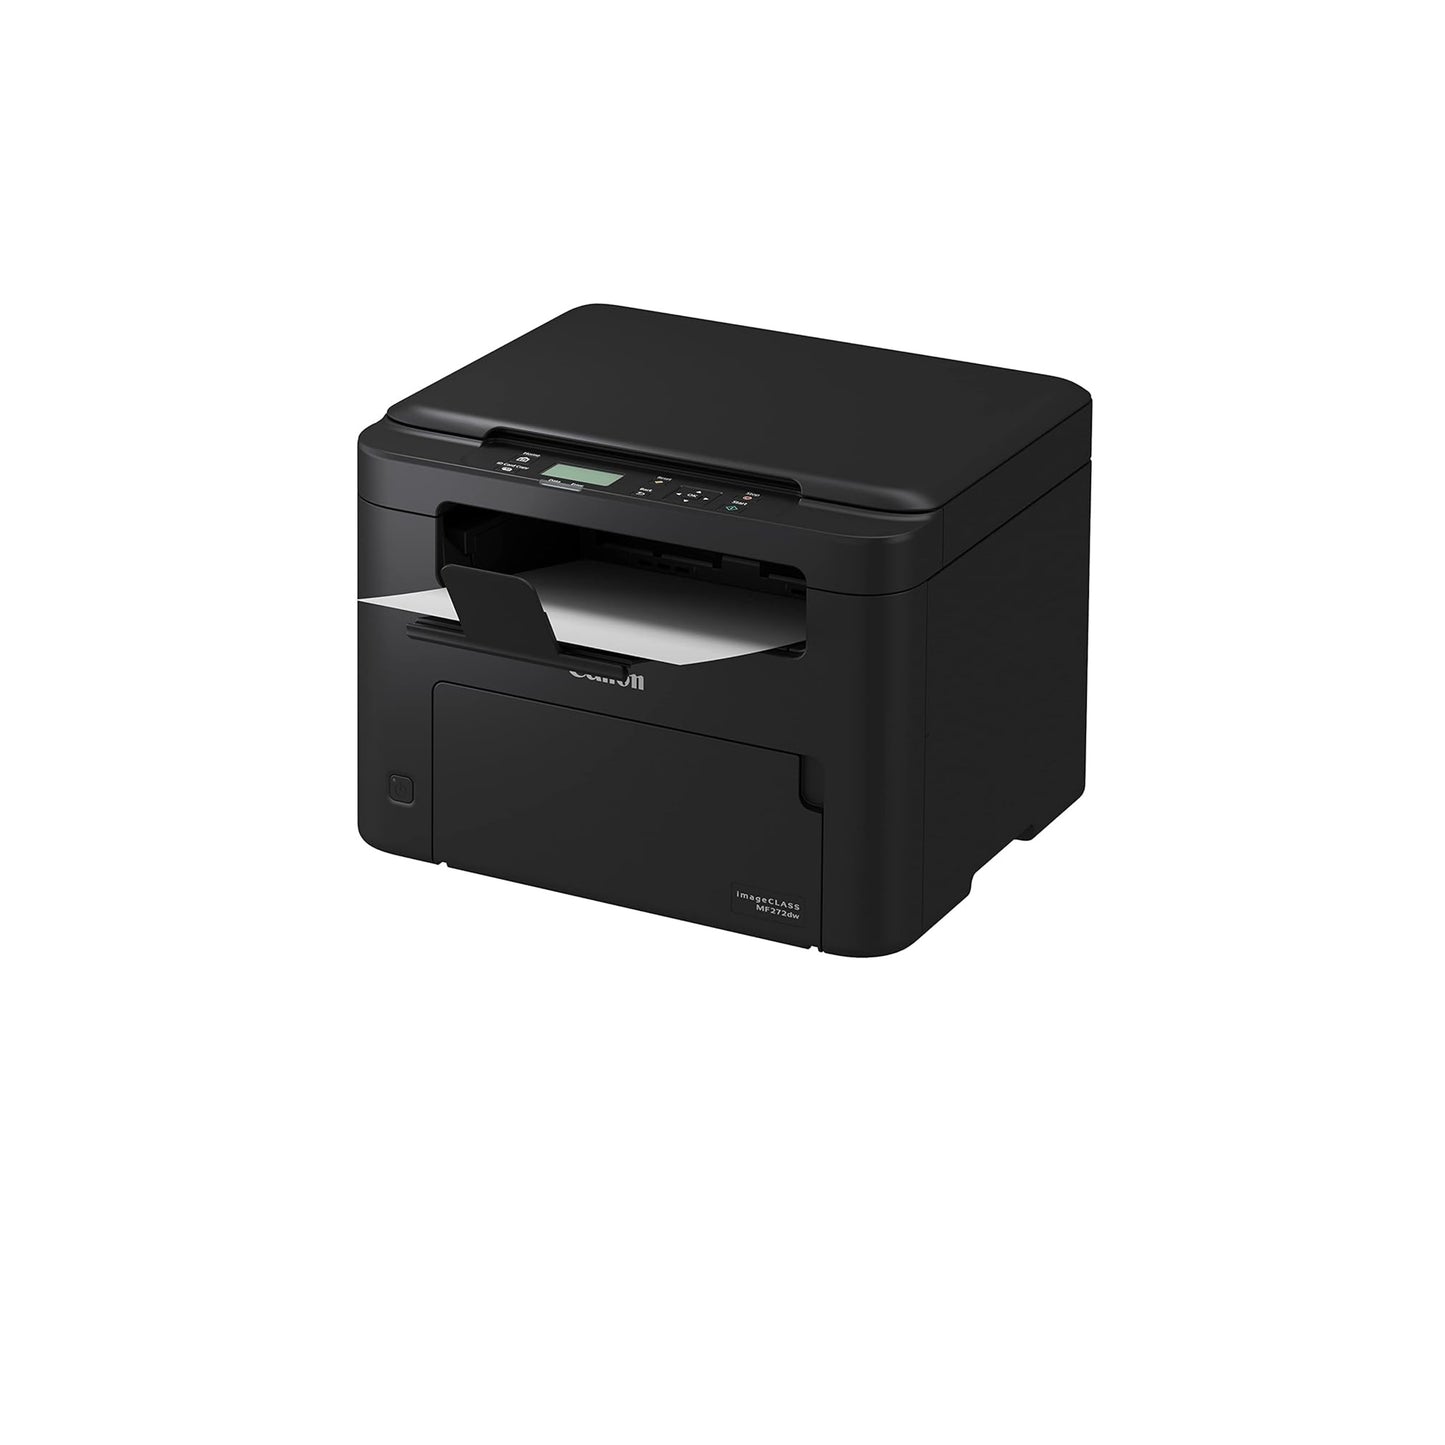 imageCLASS MF272dw - Multifunction, Wireless, Duplex Laser Printer